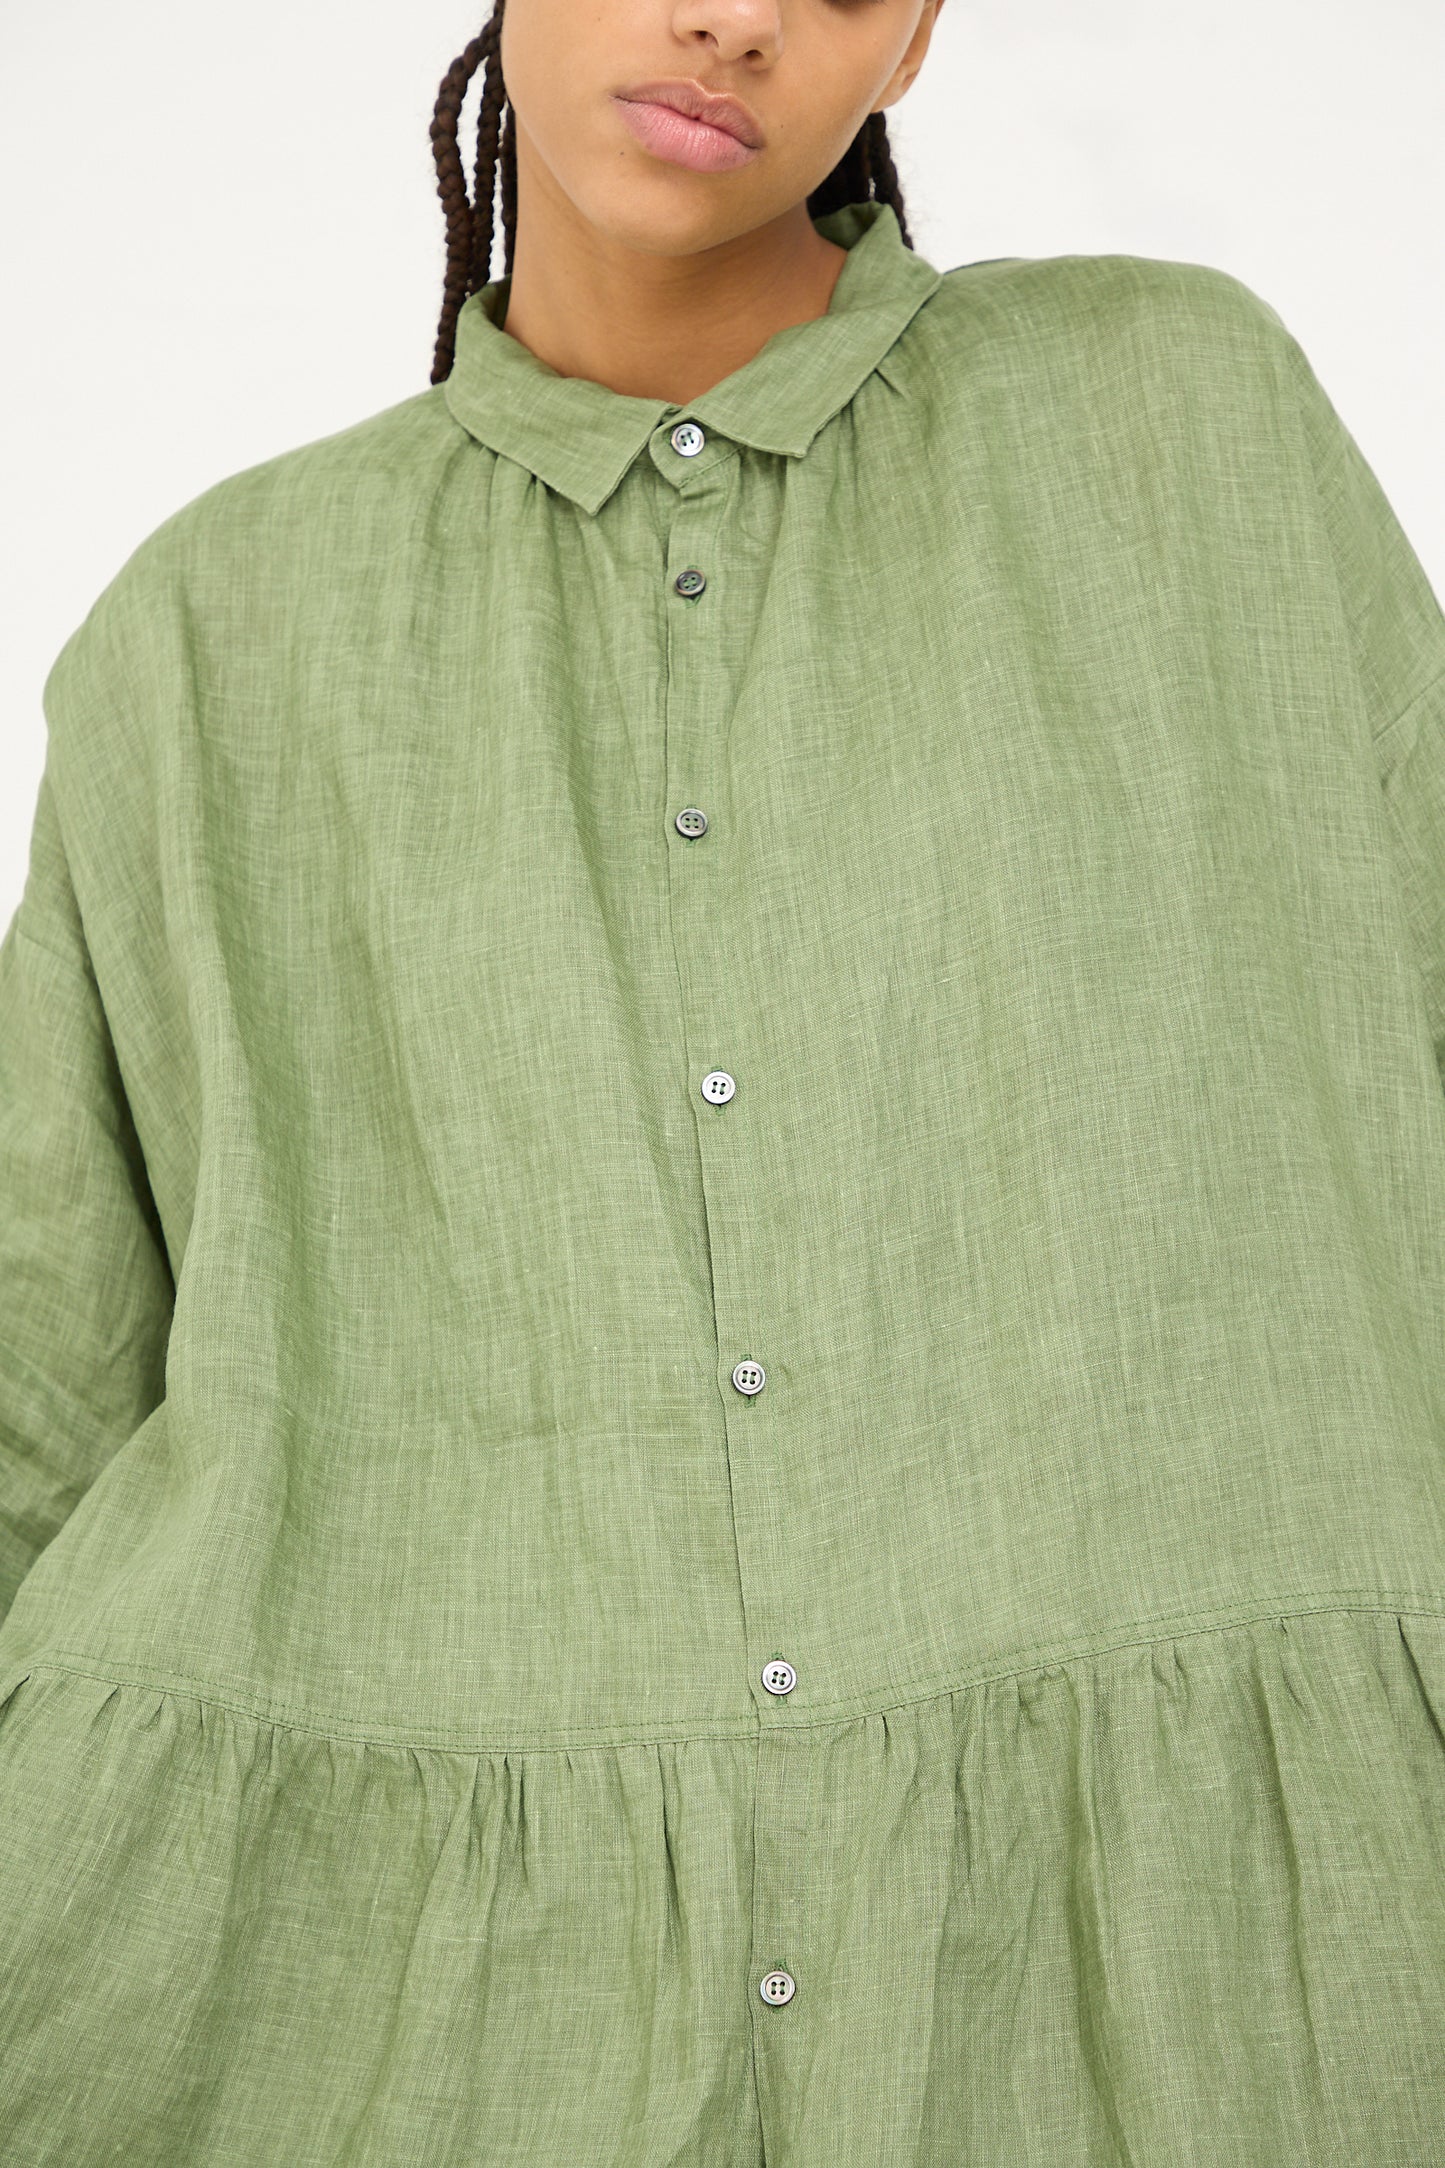 Close-up of a woman wearing an Ichi Antiquités Woven Linen Dress in Green with button details.